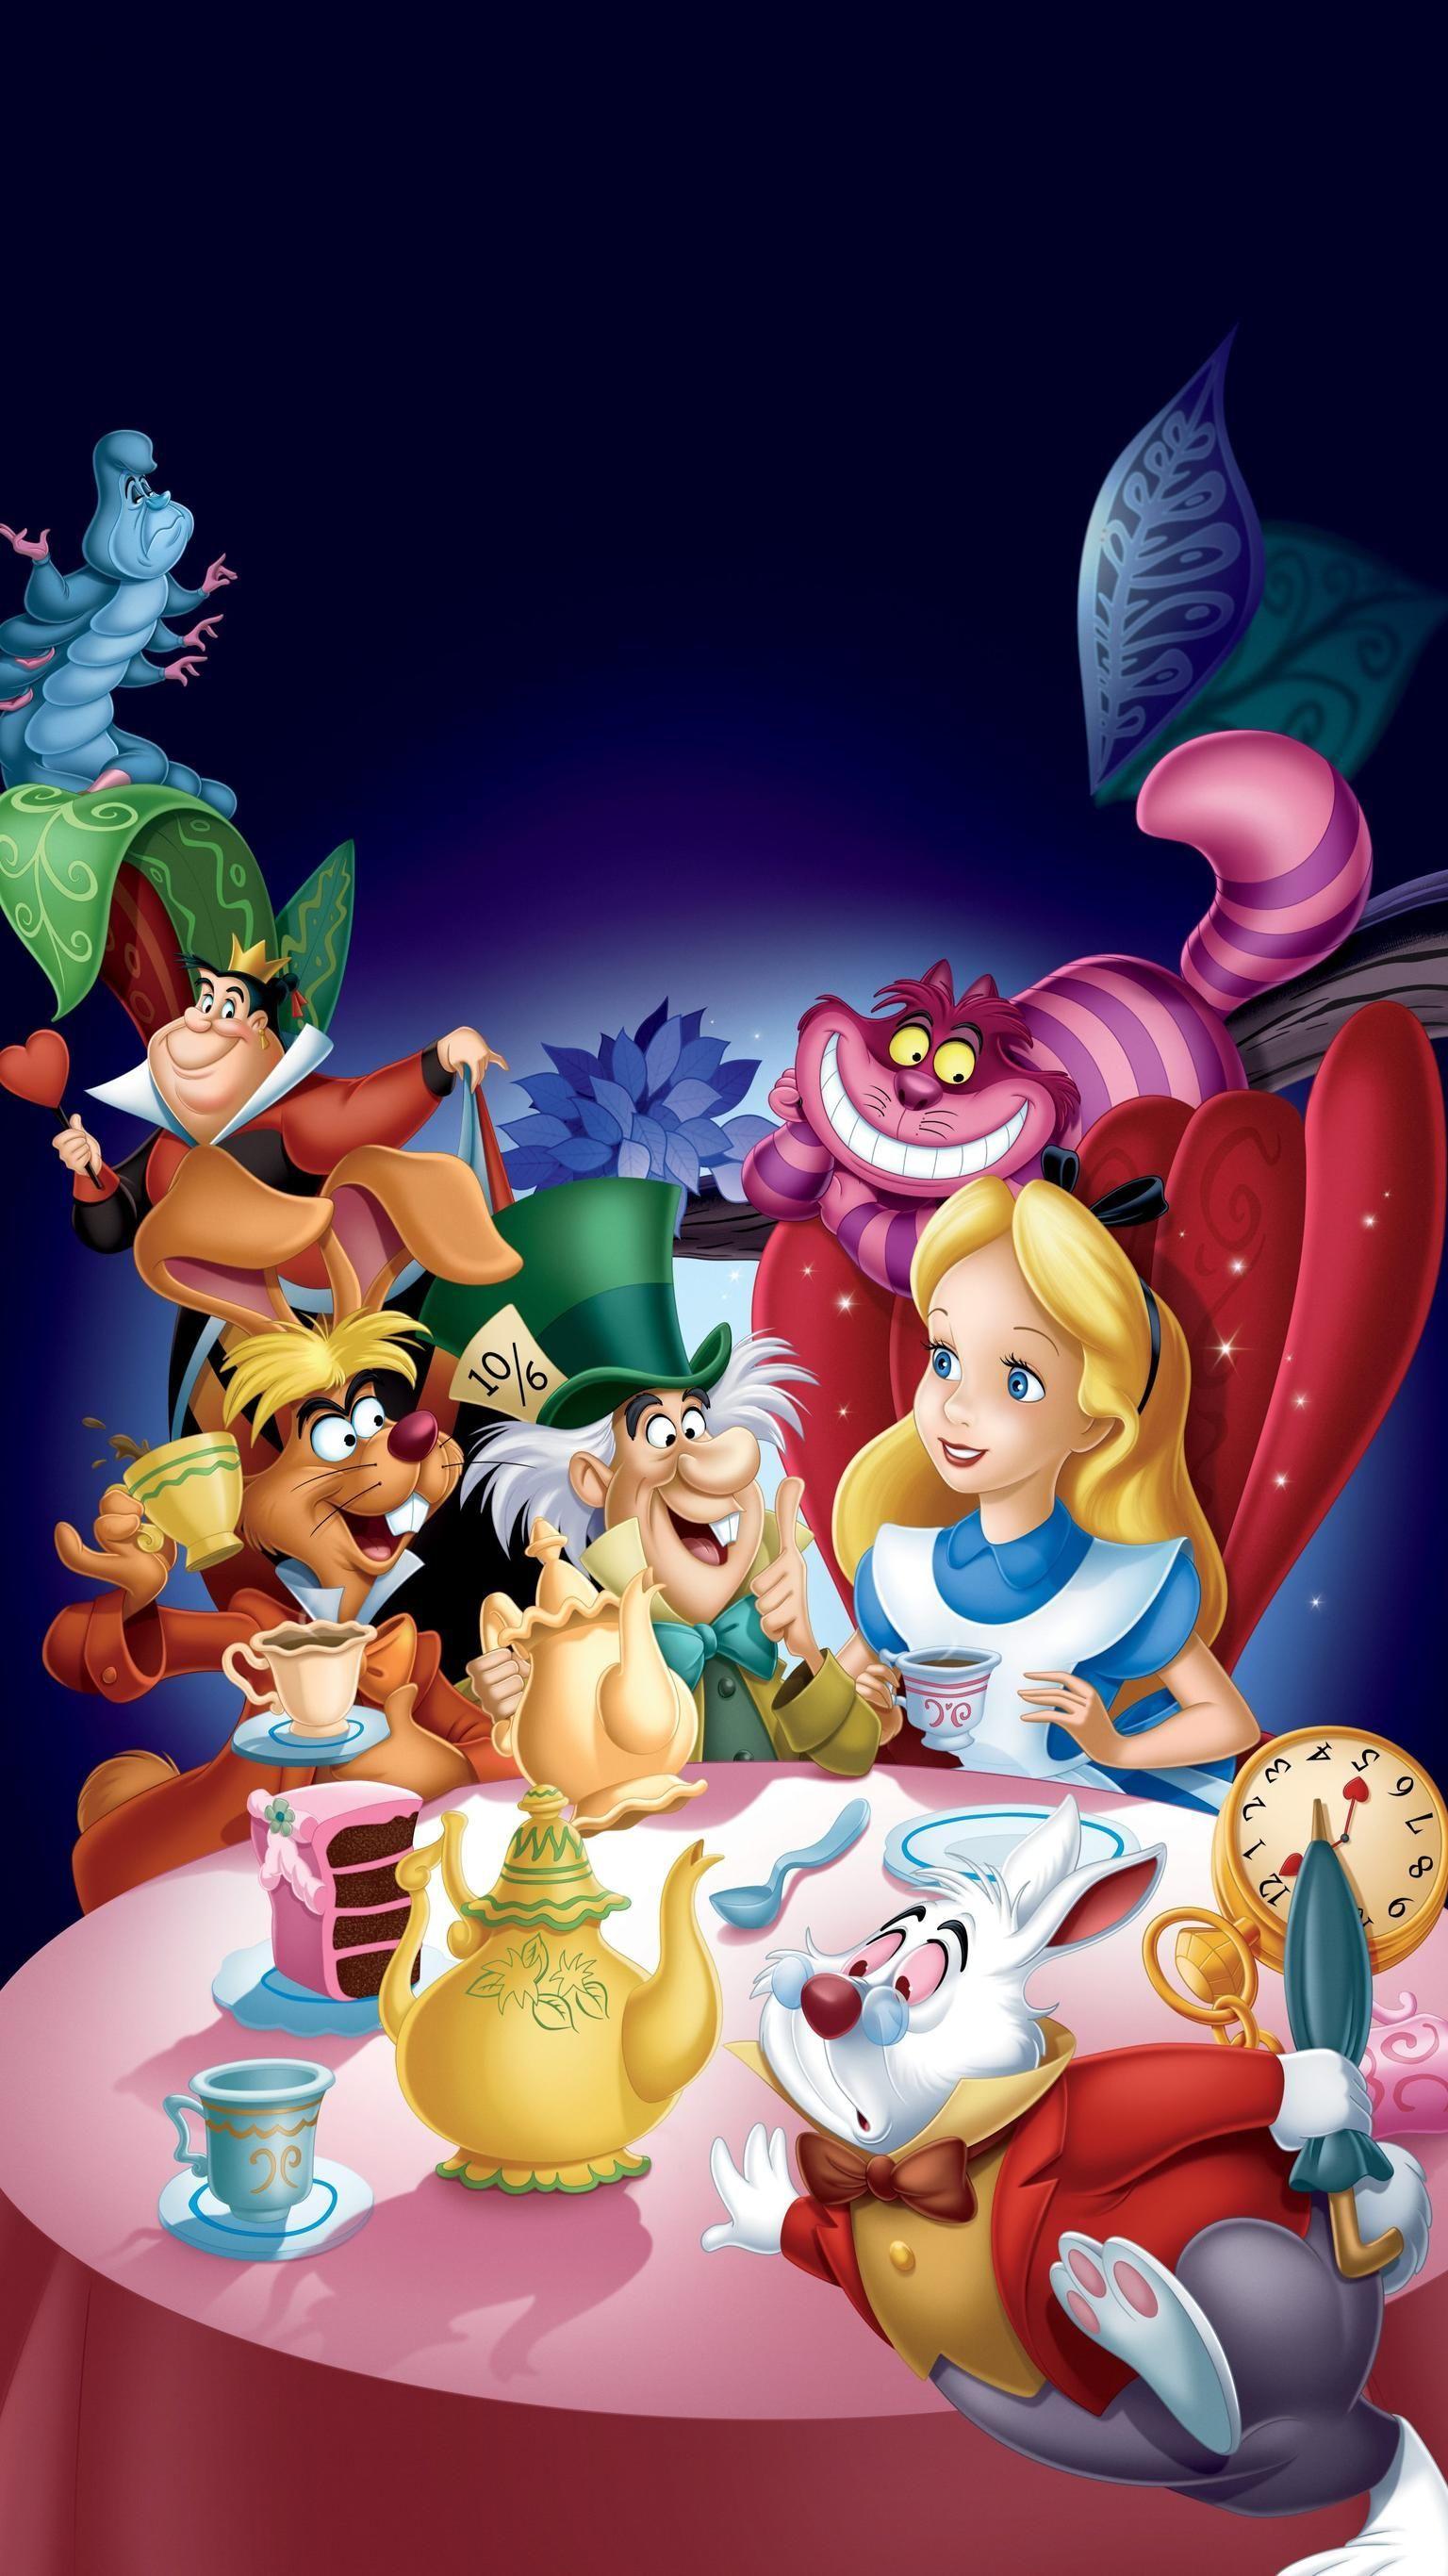 Alice in Wonderland Disney Wallpapers  Top Free Alice in Wonderland Disney Backgrounds  